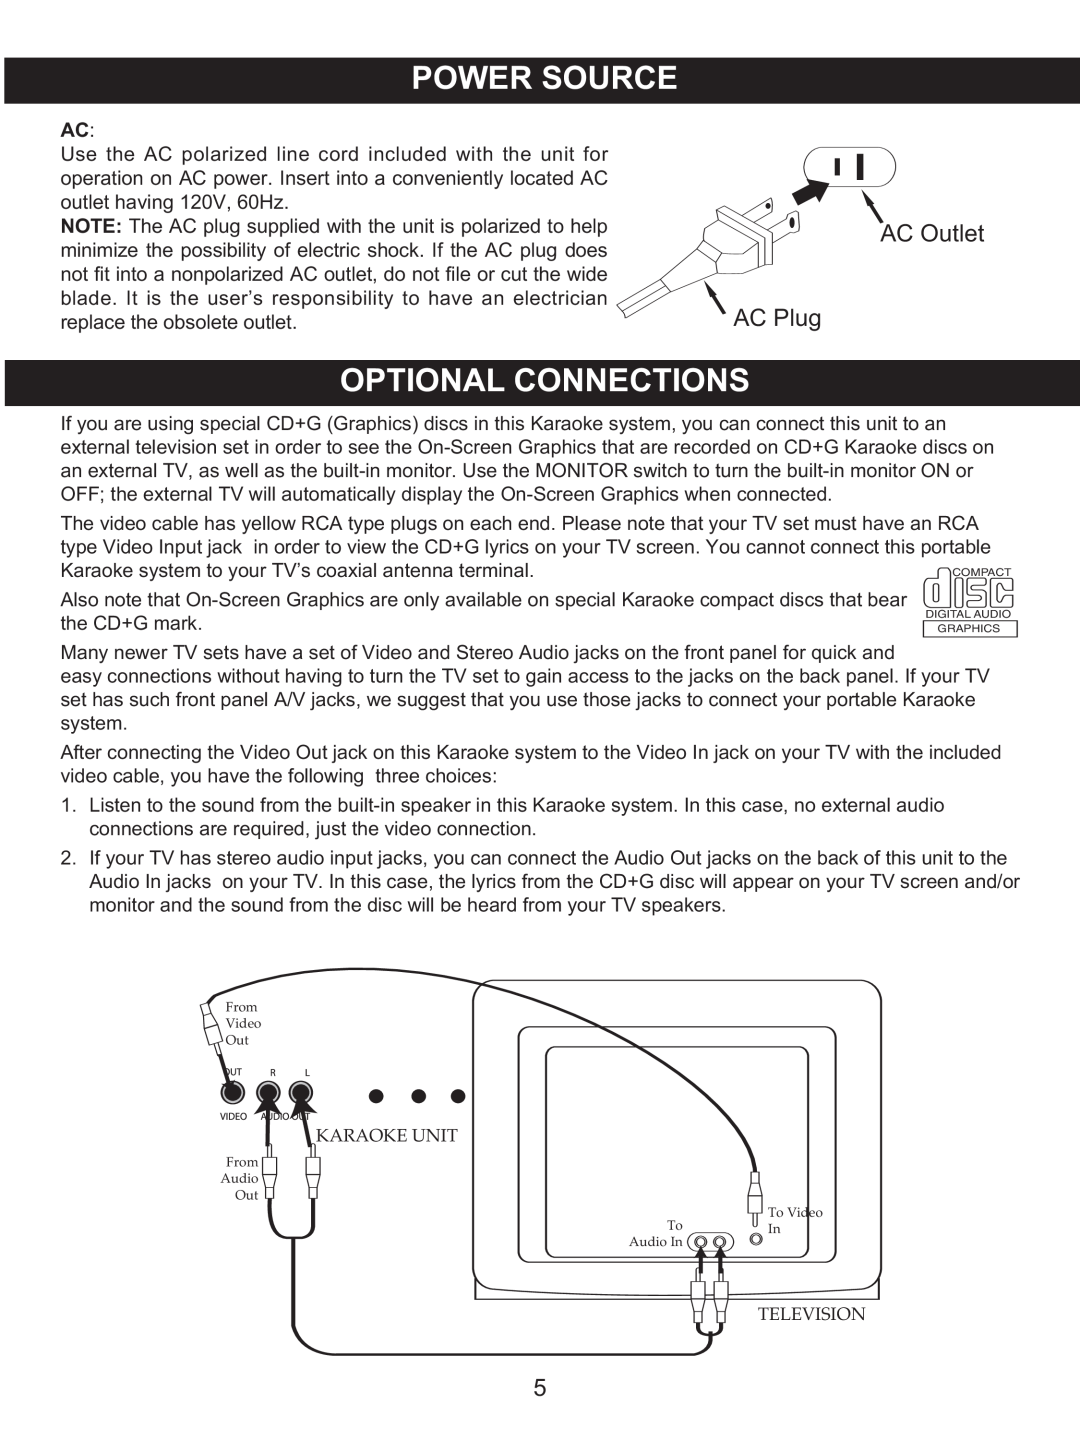 Memorex MKS8590 manual AC Outlet, AC Plug 